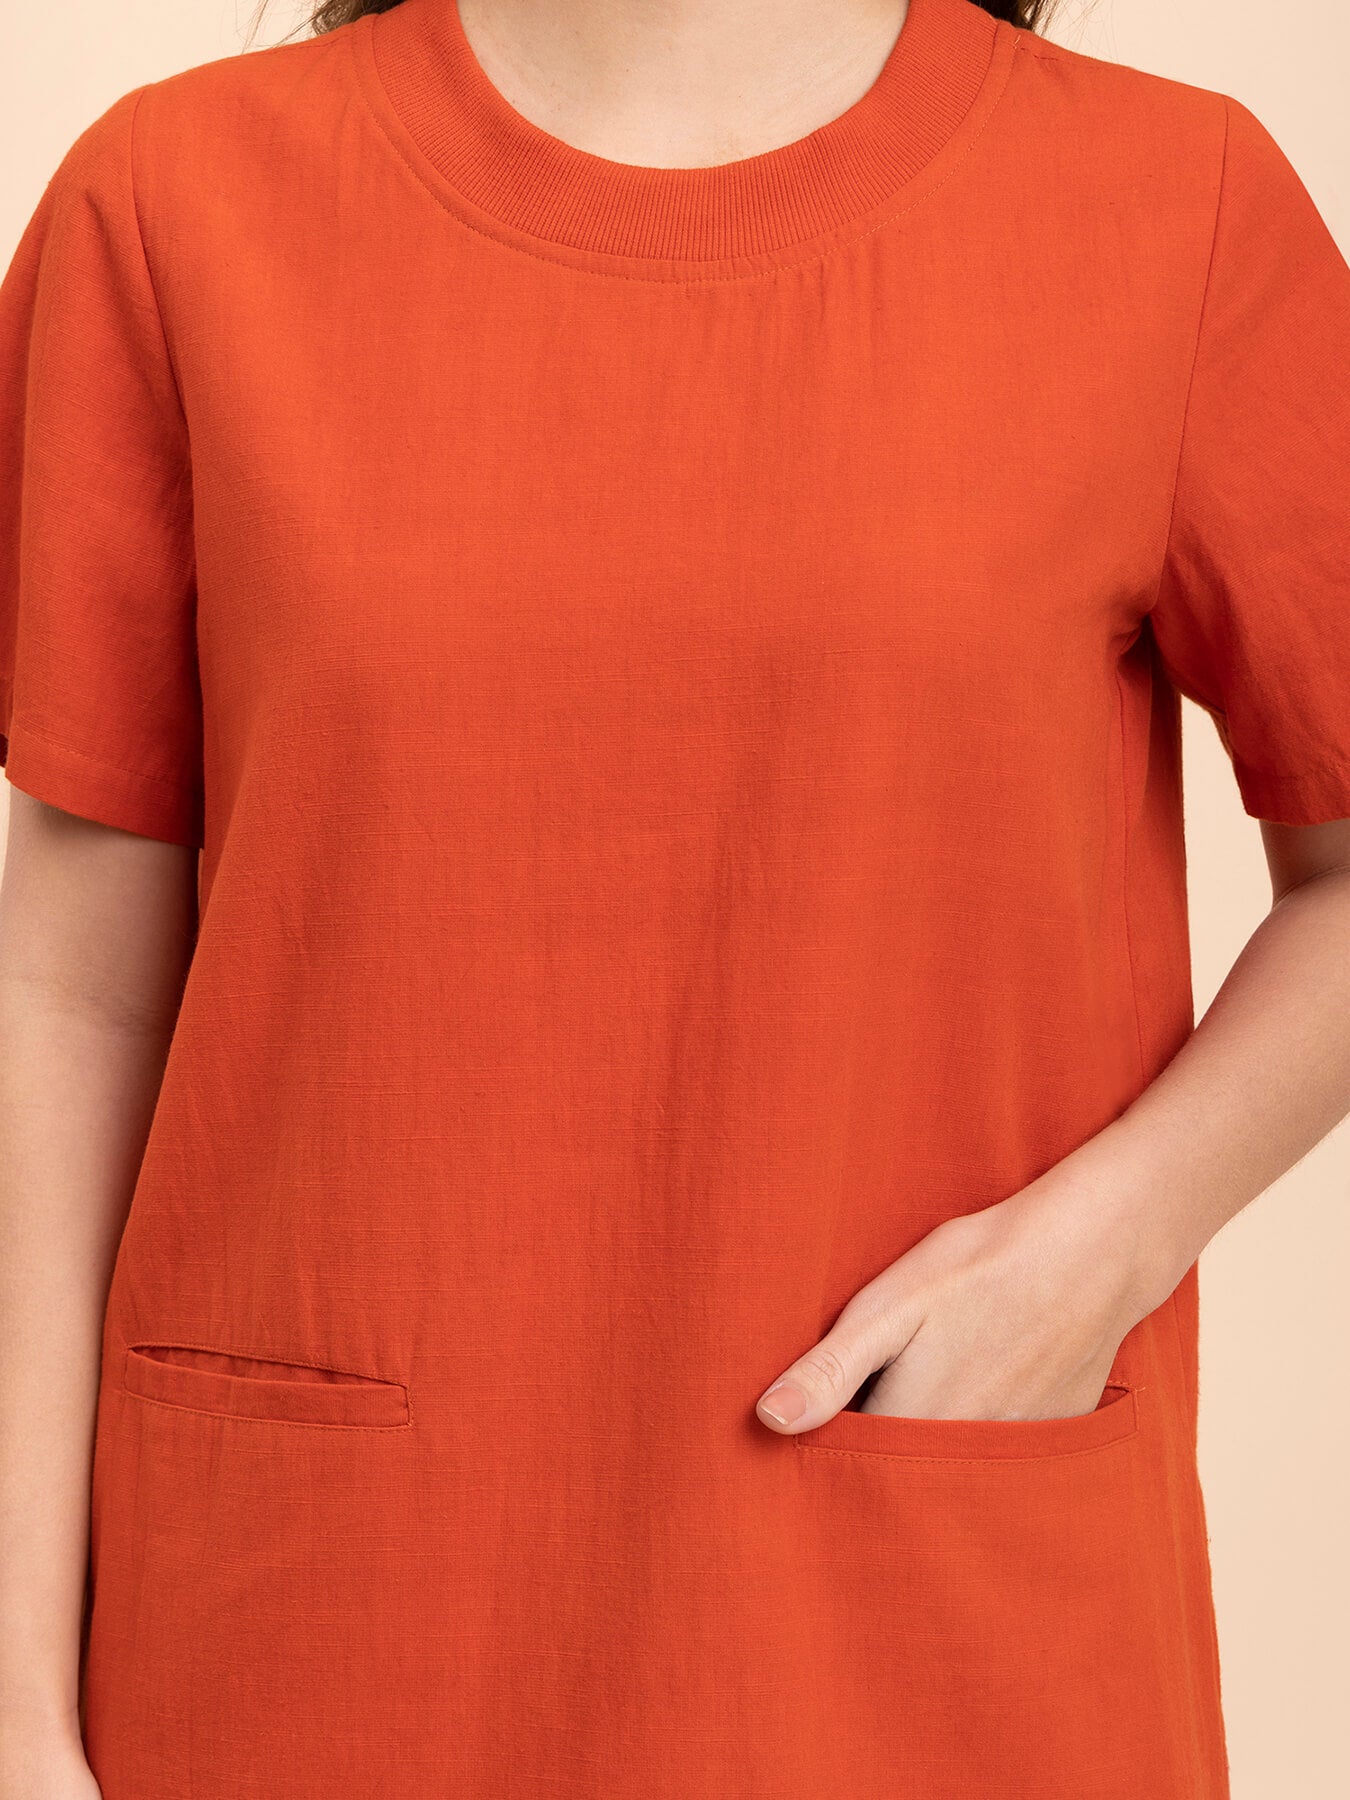 Linen Round Neck Shift Dress - Burnt Orange